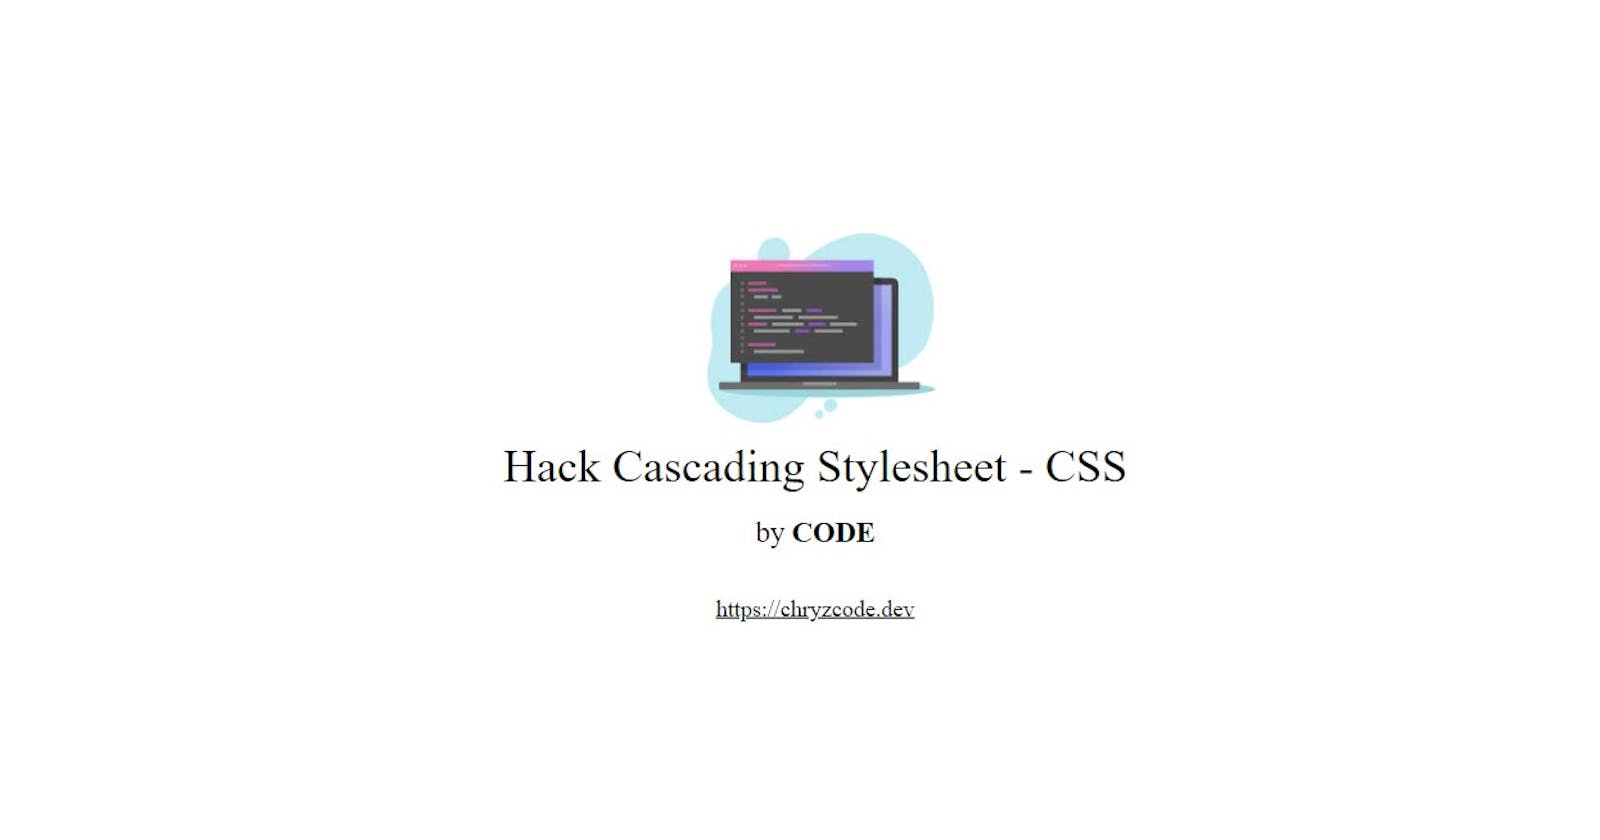 Hack Cascading Stylesheet - CSS